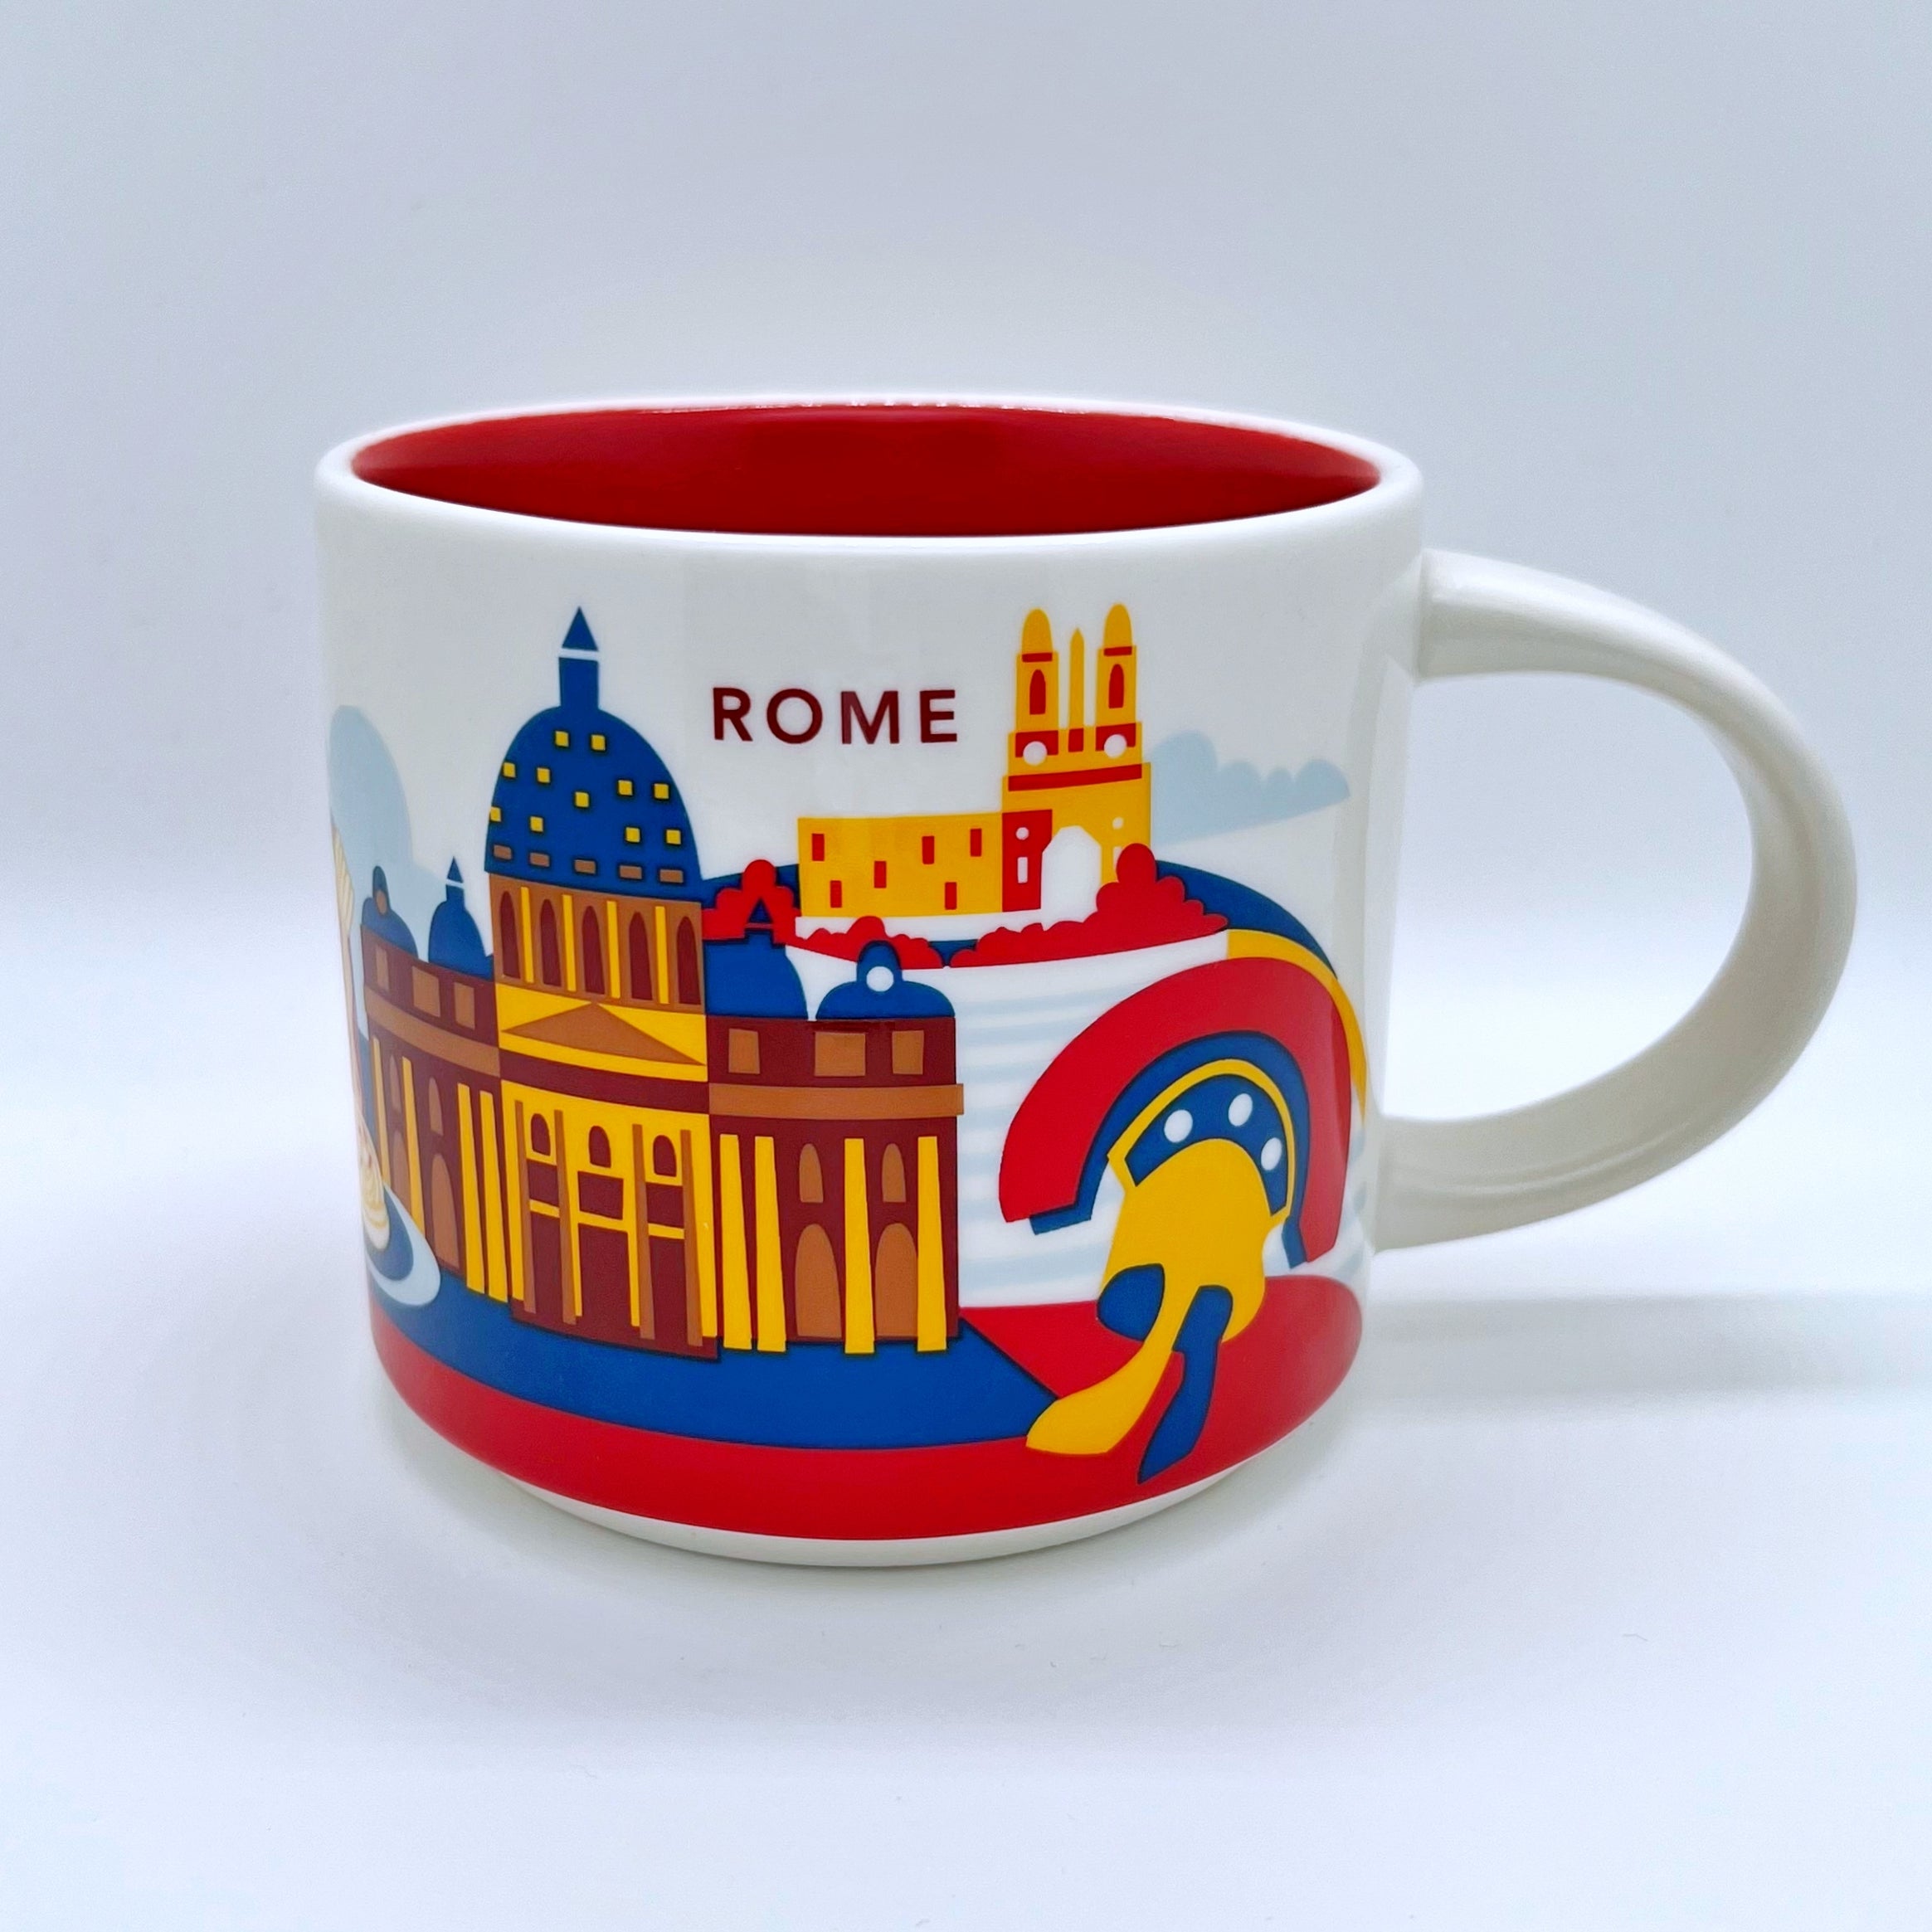 Rome City Kaffee Tasse